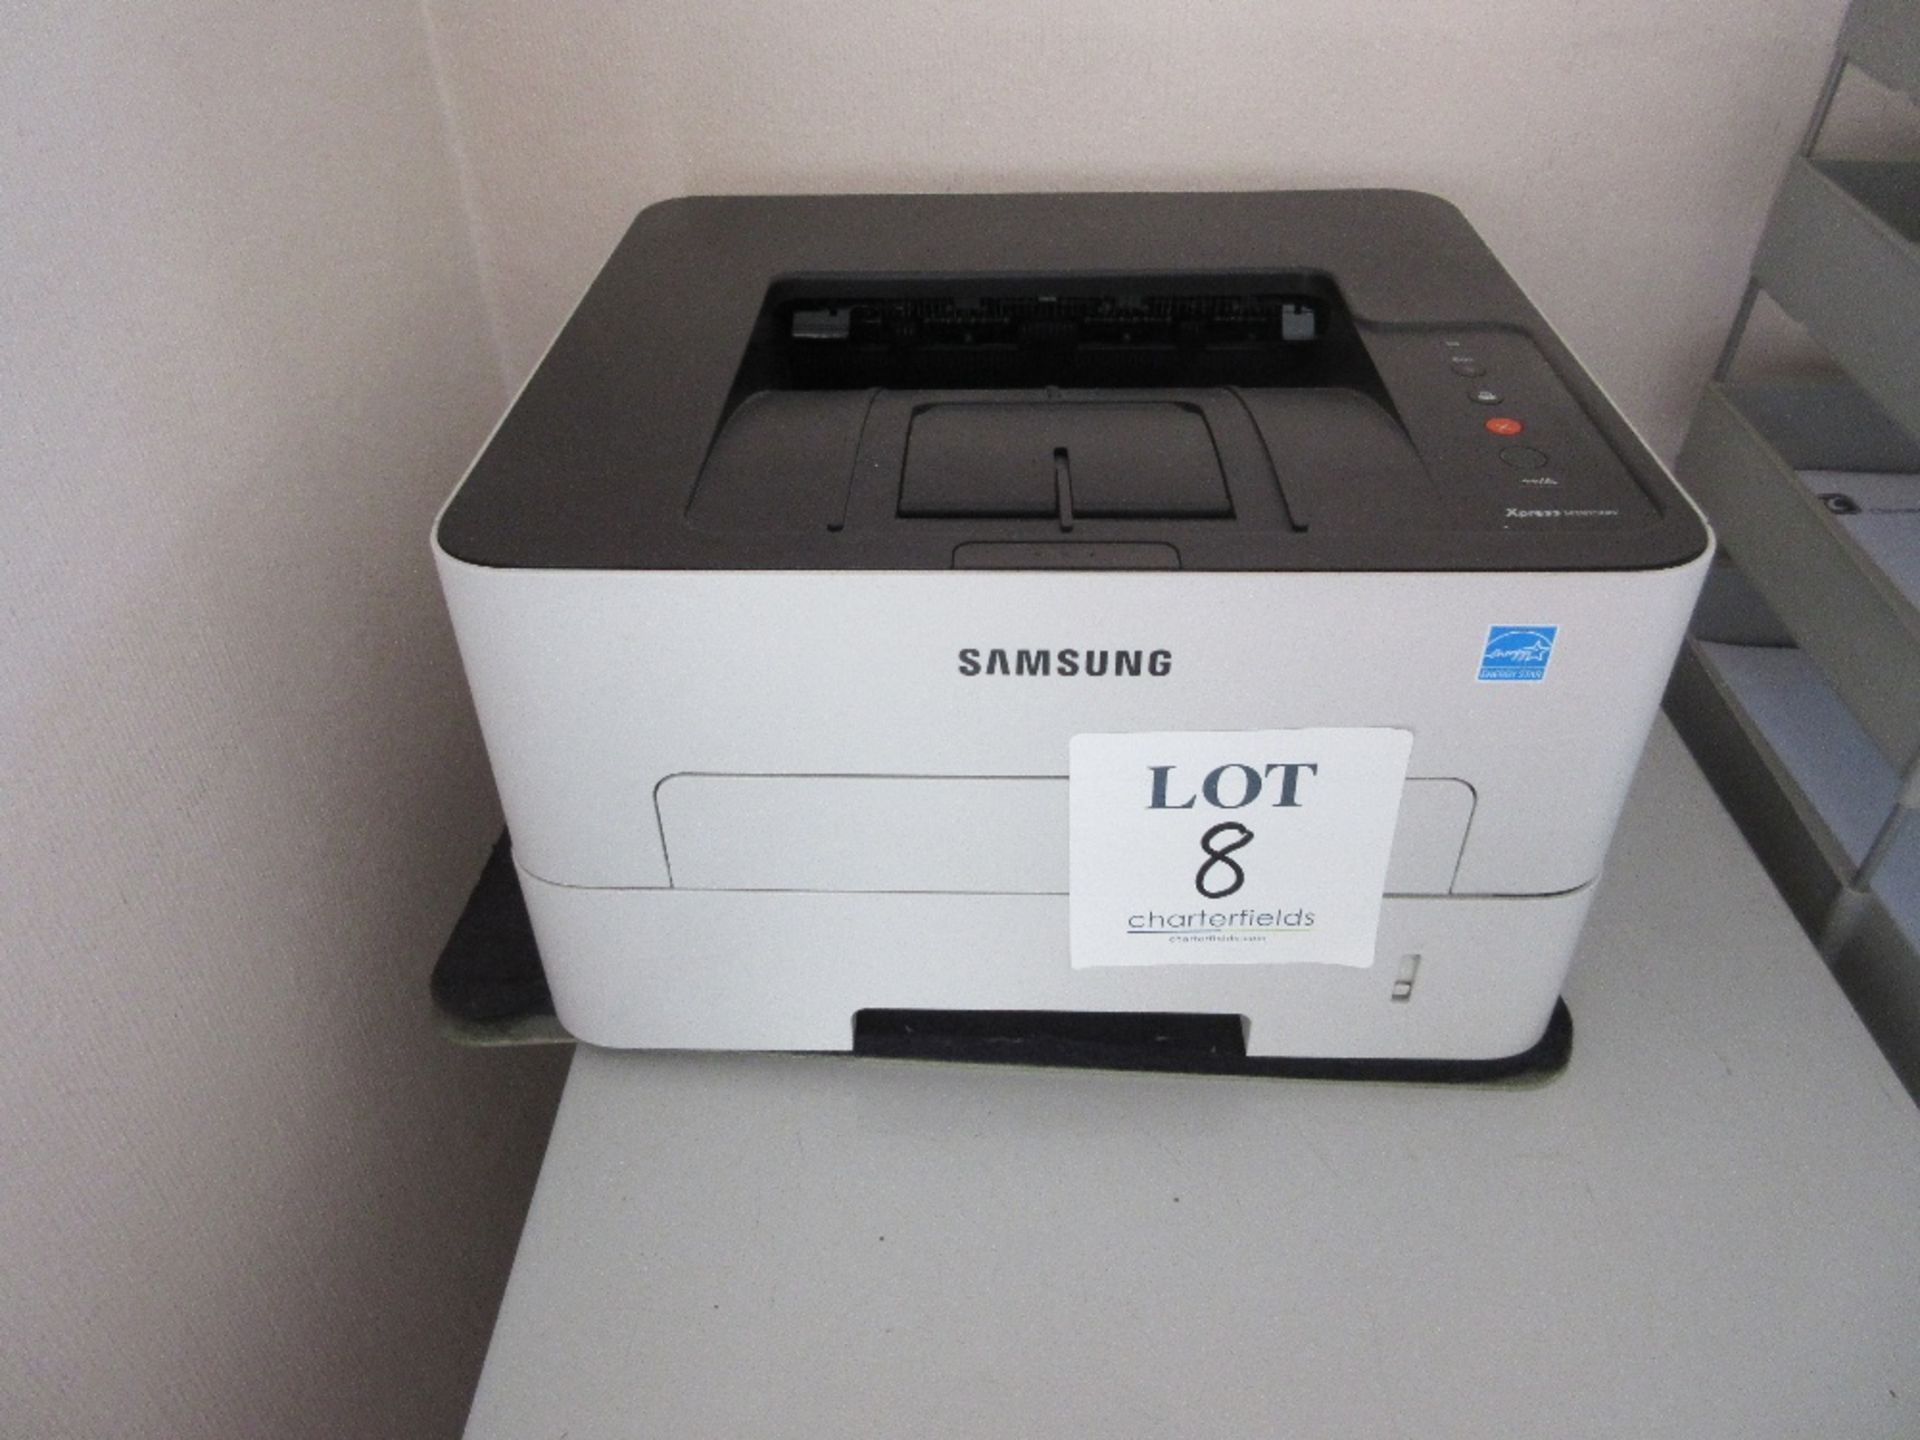 Samsung M2825 ND printer